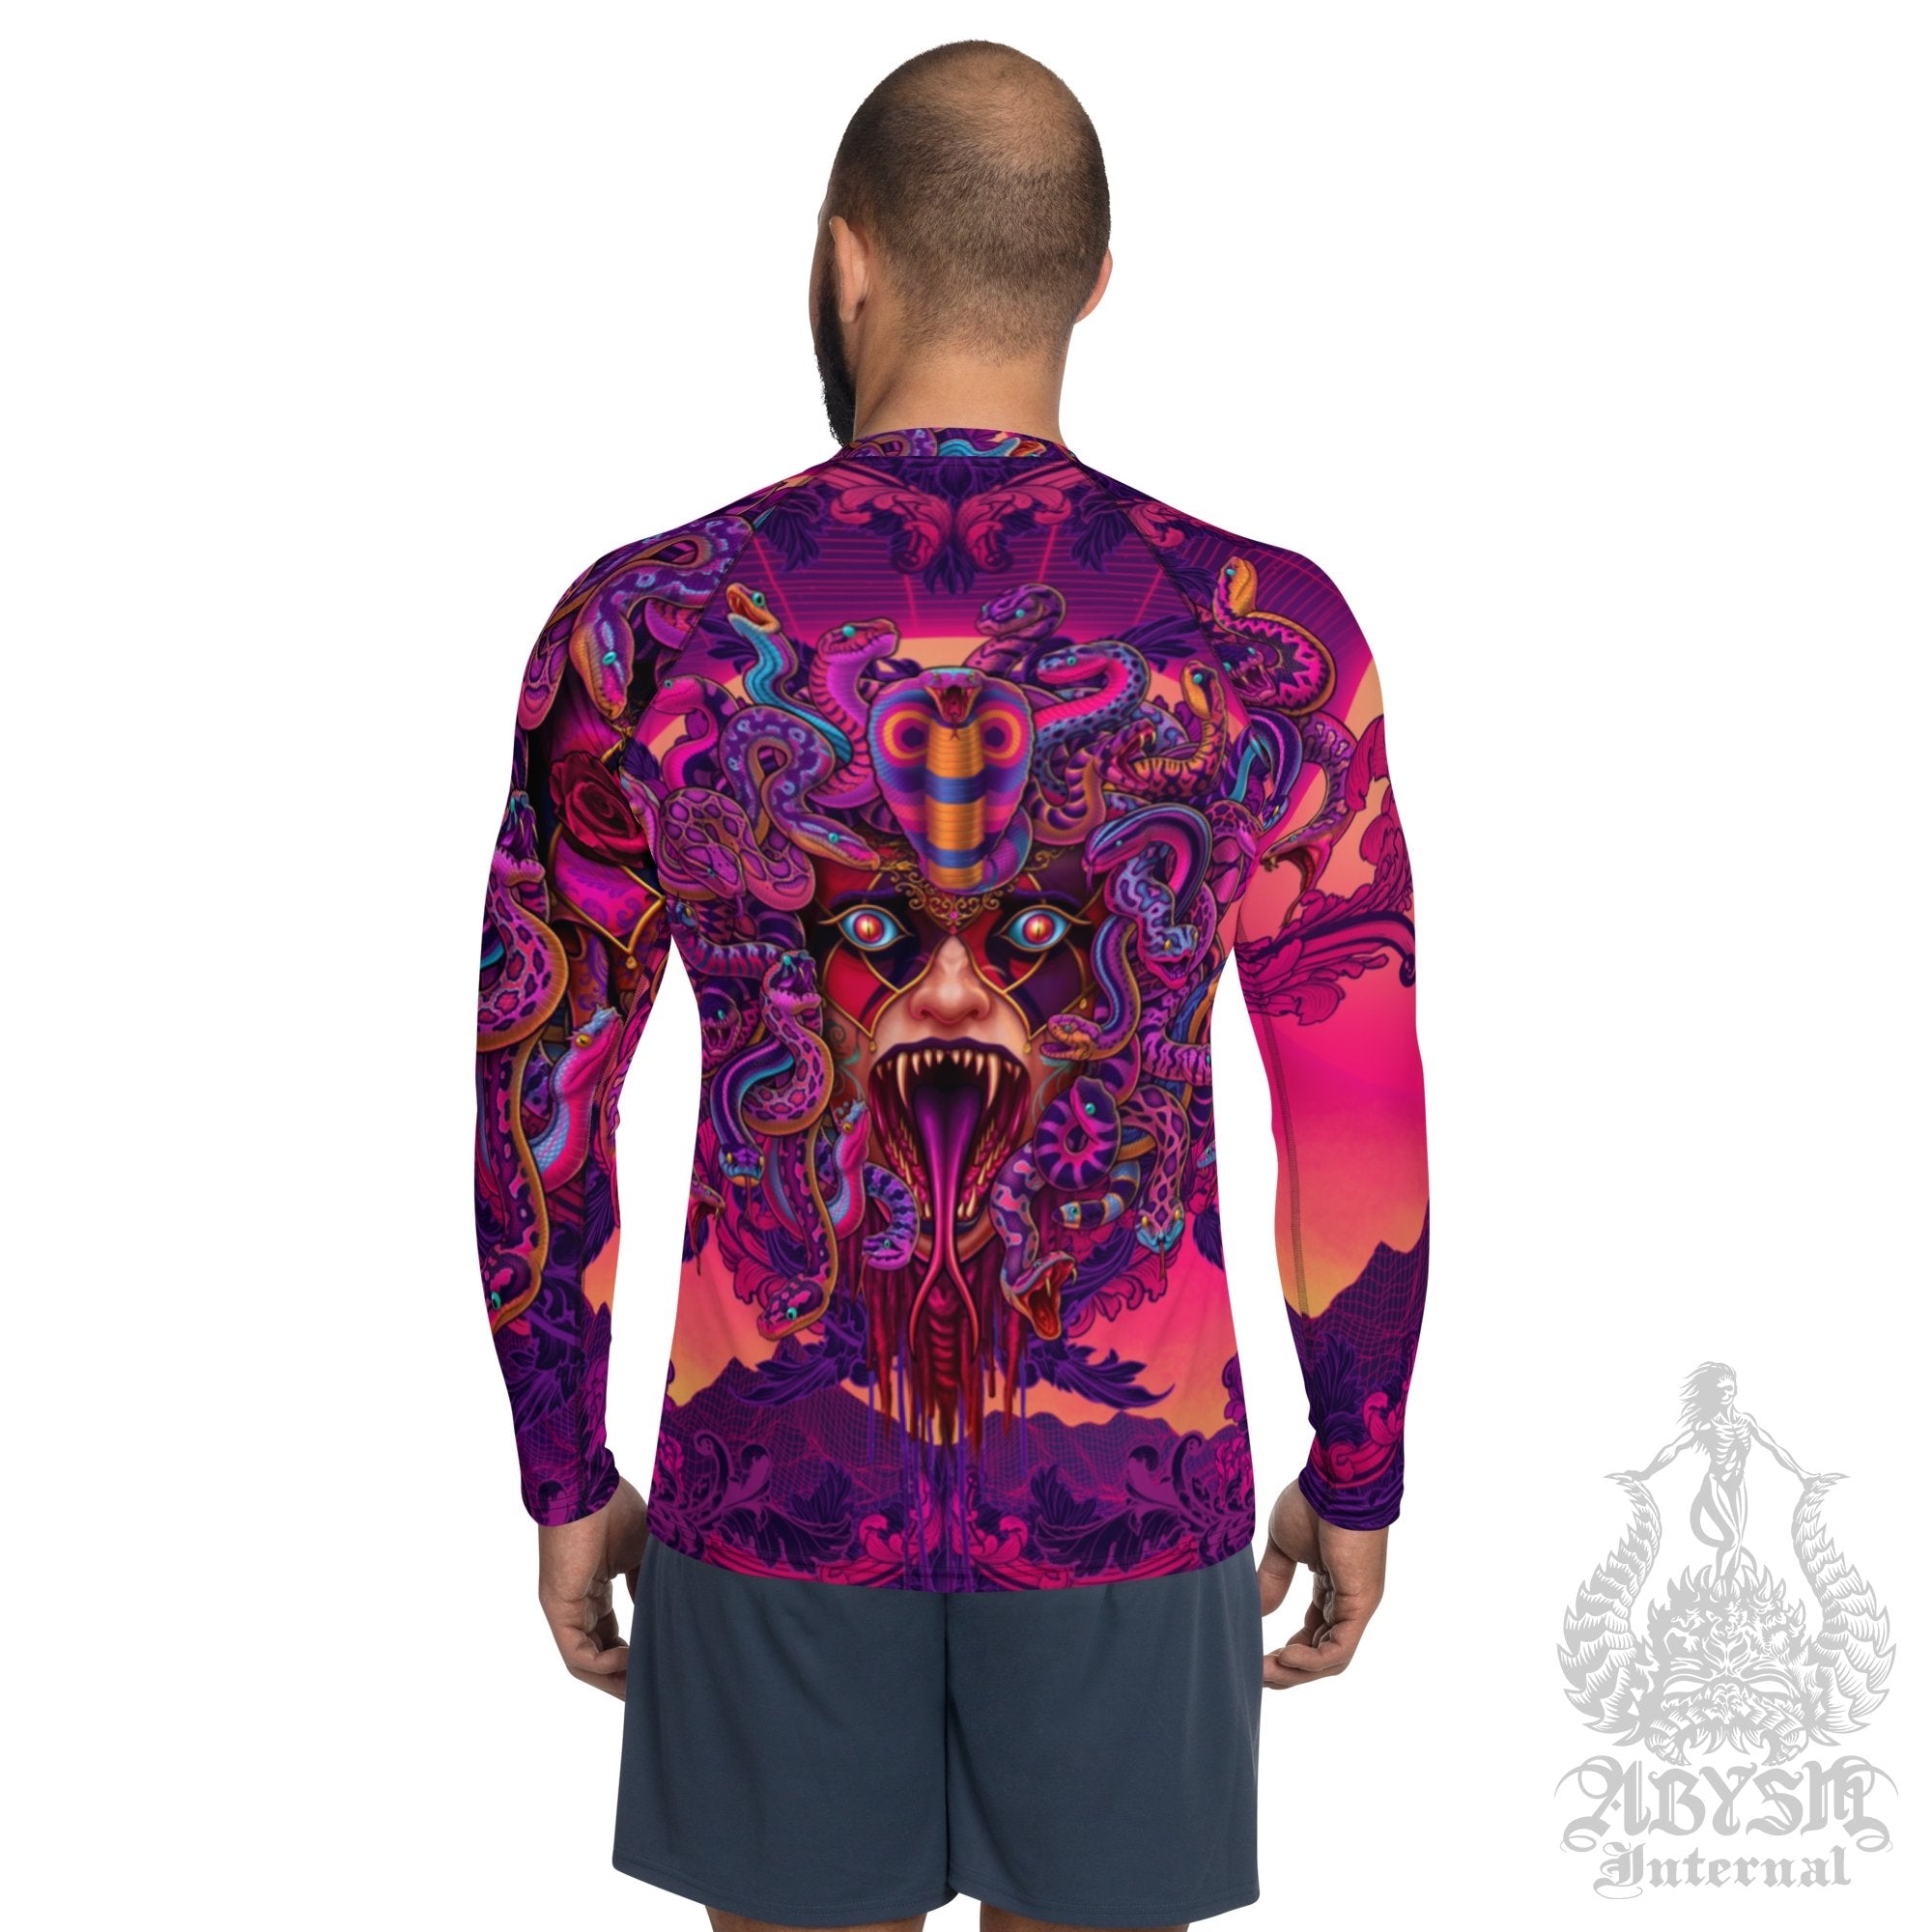 Cool Men's Rash Guard, Long Sleeve spandex shirt for surfing, swimwear top for water sports, Fantasy Art - Vaporwave Medusa - Abysm Internal